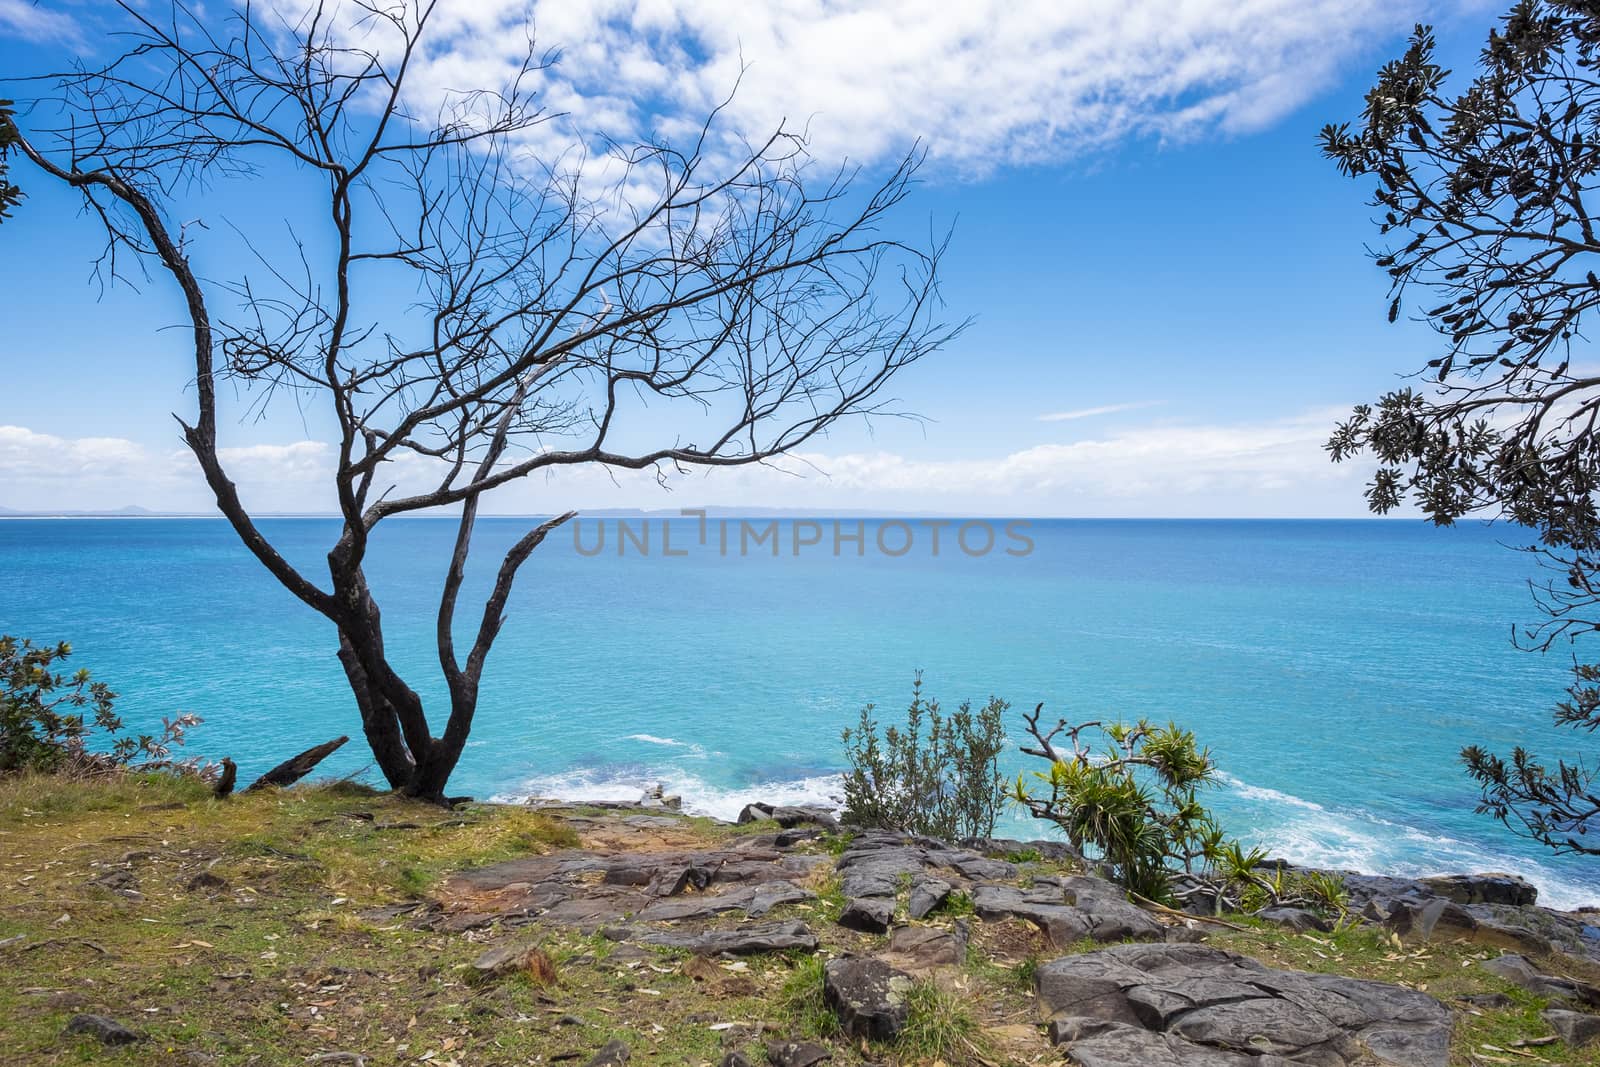 Black tree near blue sea at Dolphin point, Noosa heads, Australi by rainfallsup